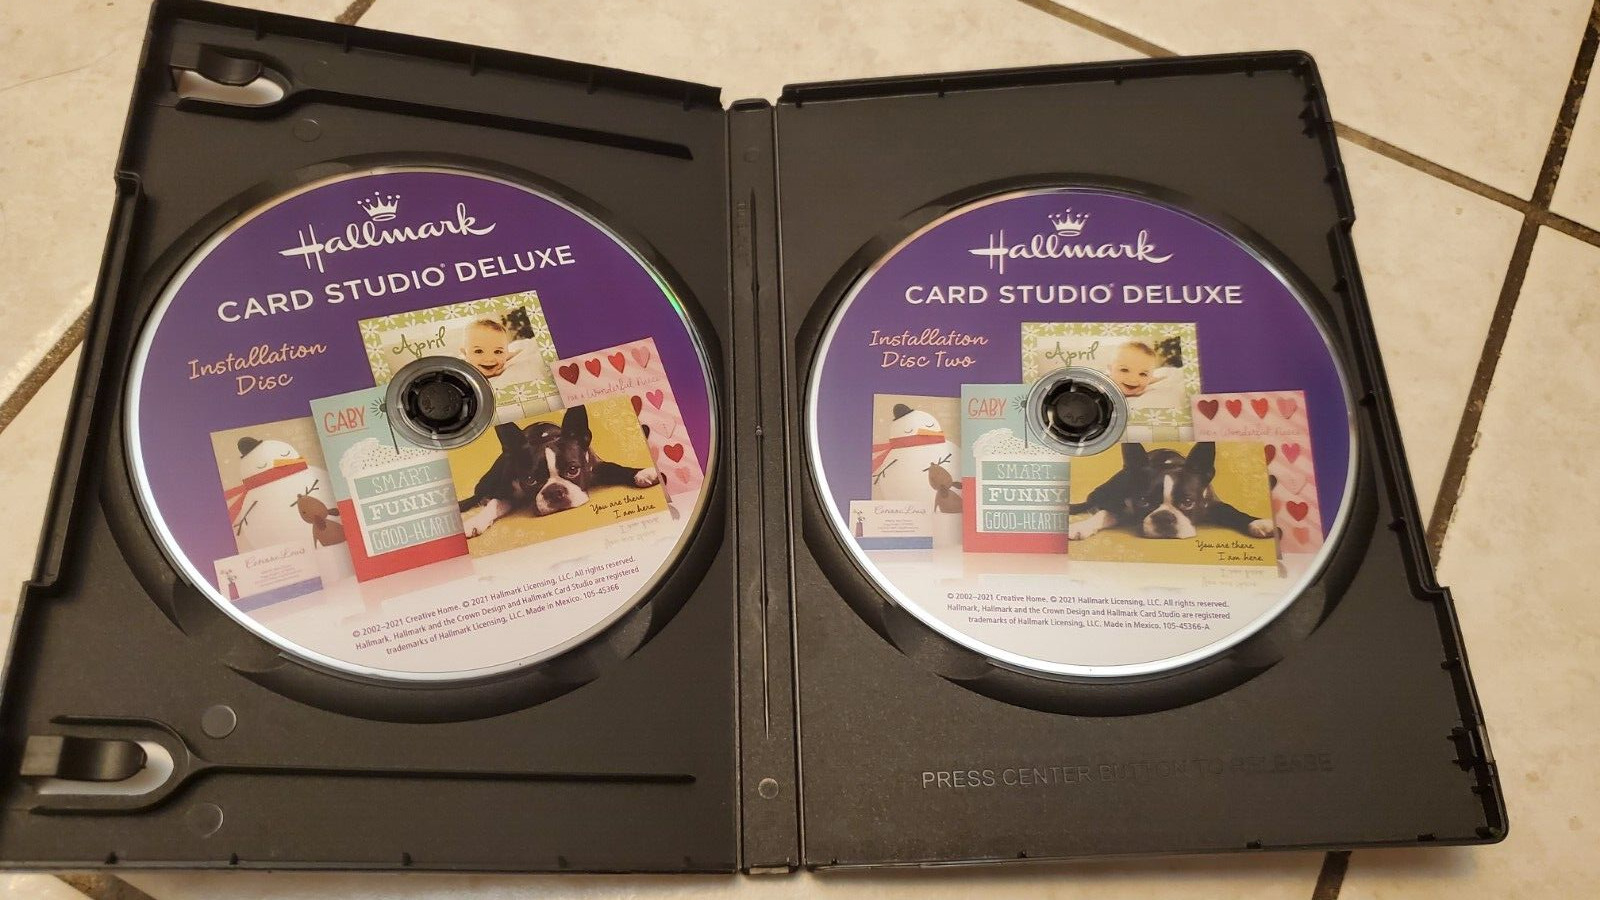 Hallmark Card Studio Deluxe - Greeting Card maker software for Windows (DVD set)